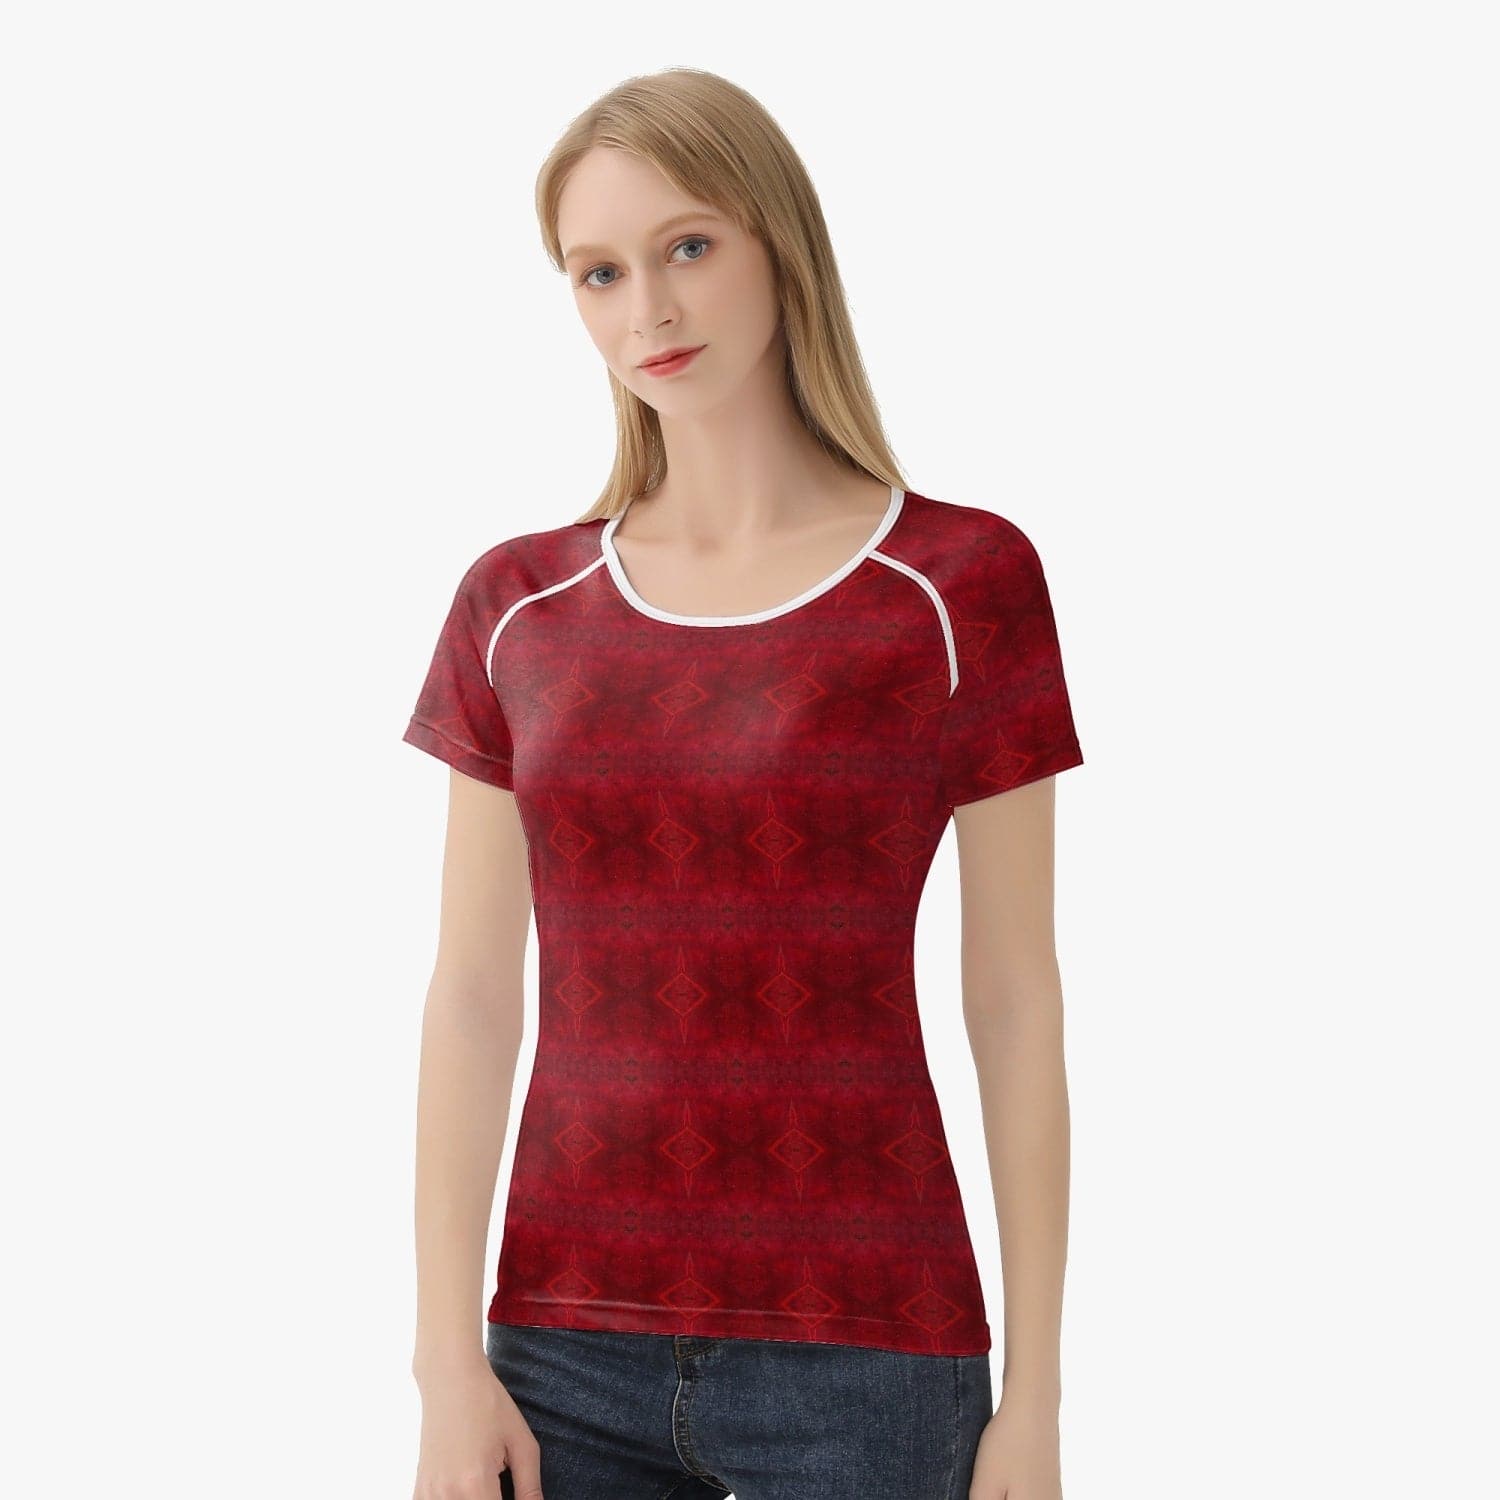 Dark Red Patterned Handmade Stylish Women T-shirt Sports/ Yoga Top, by Sensus Studio Design